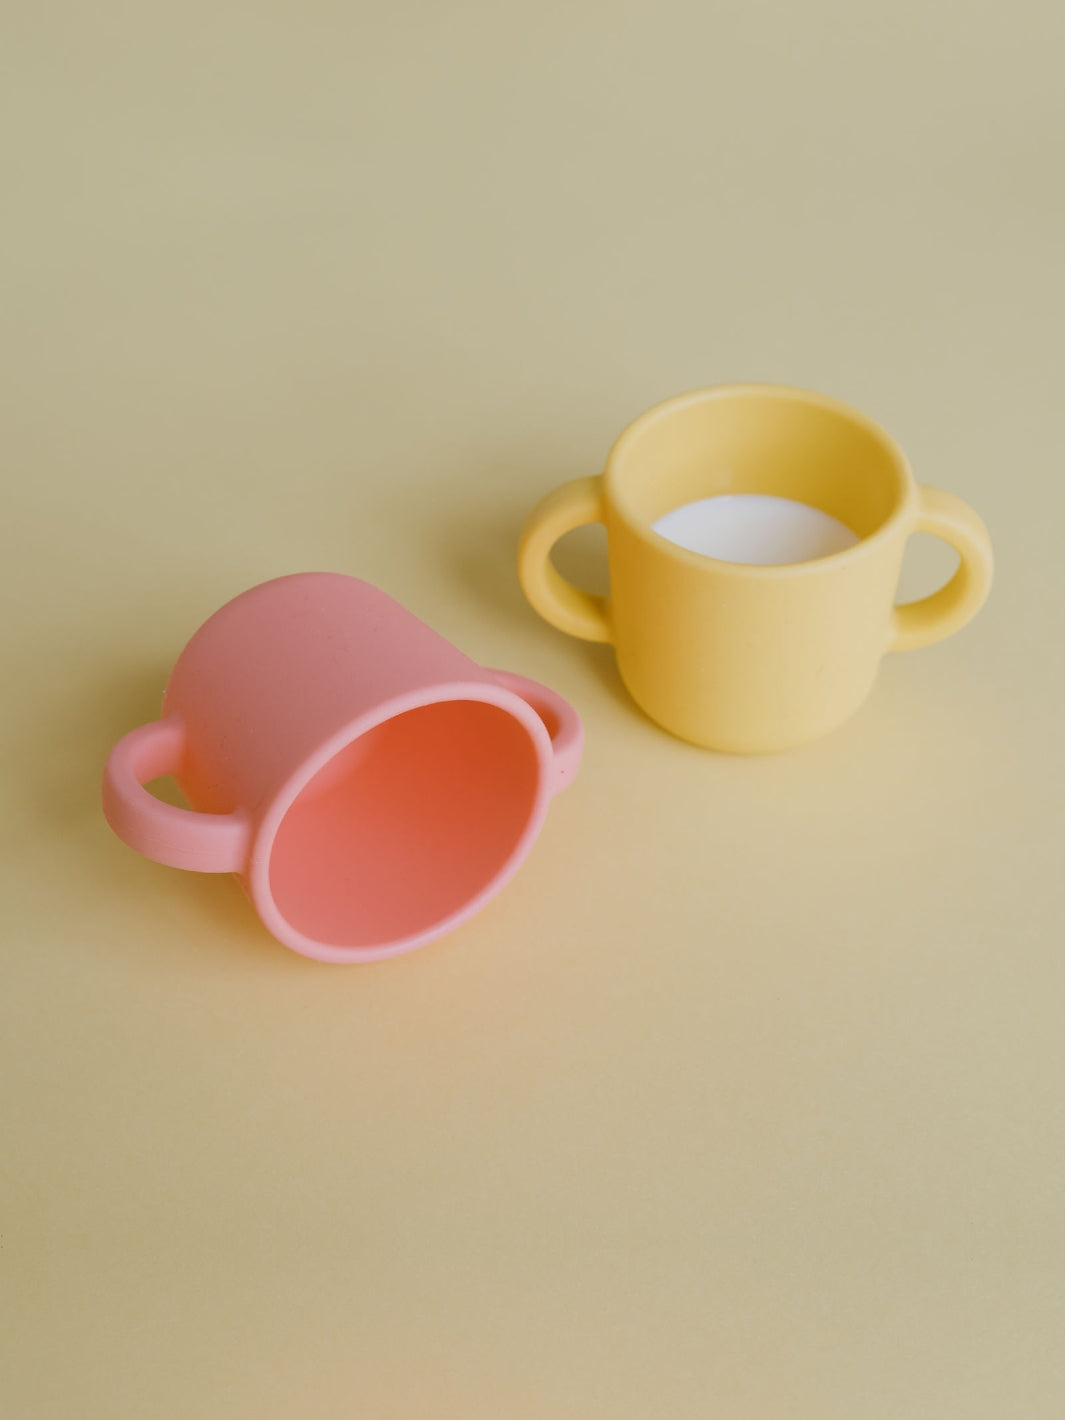 EKOBO Bambino Silicone Cup with Handles Set (2 cups)